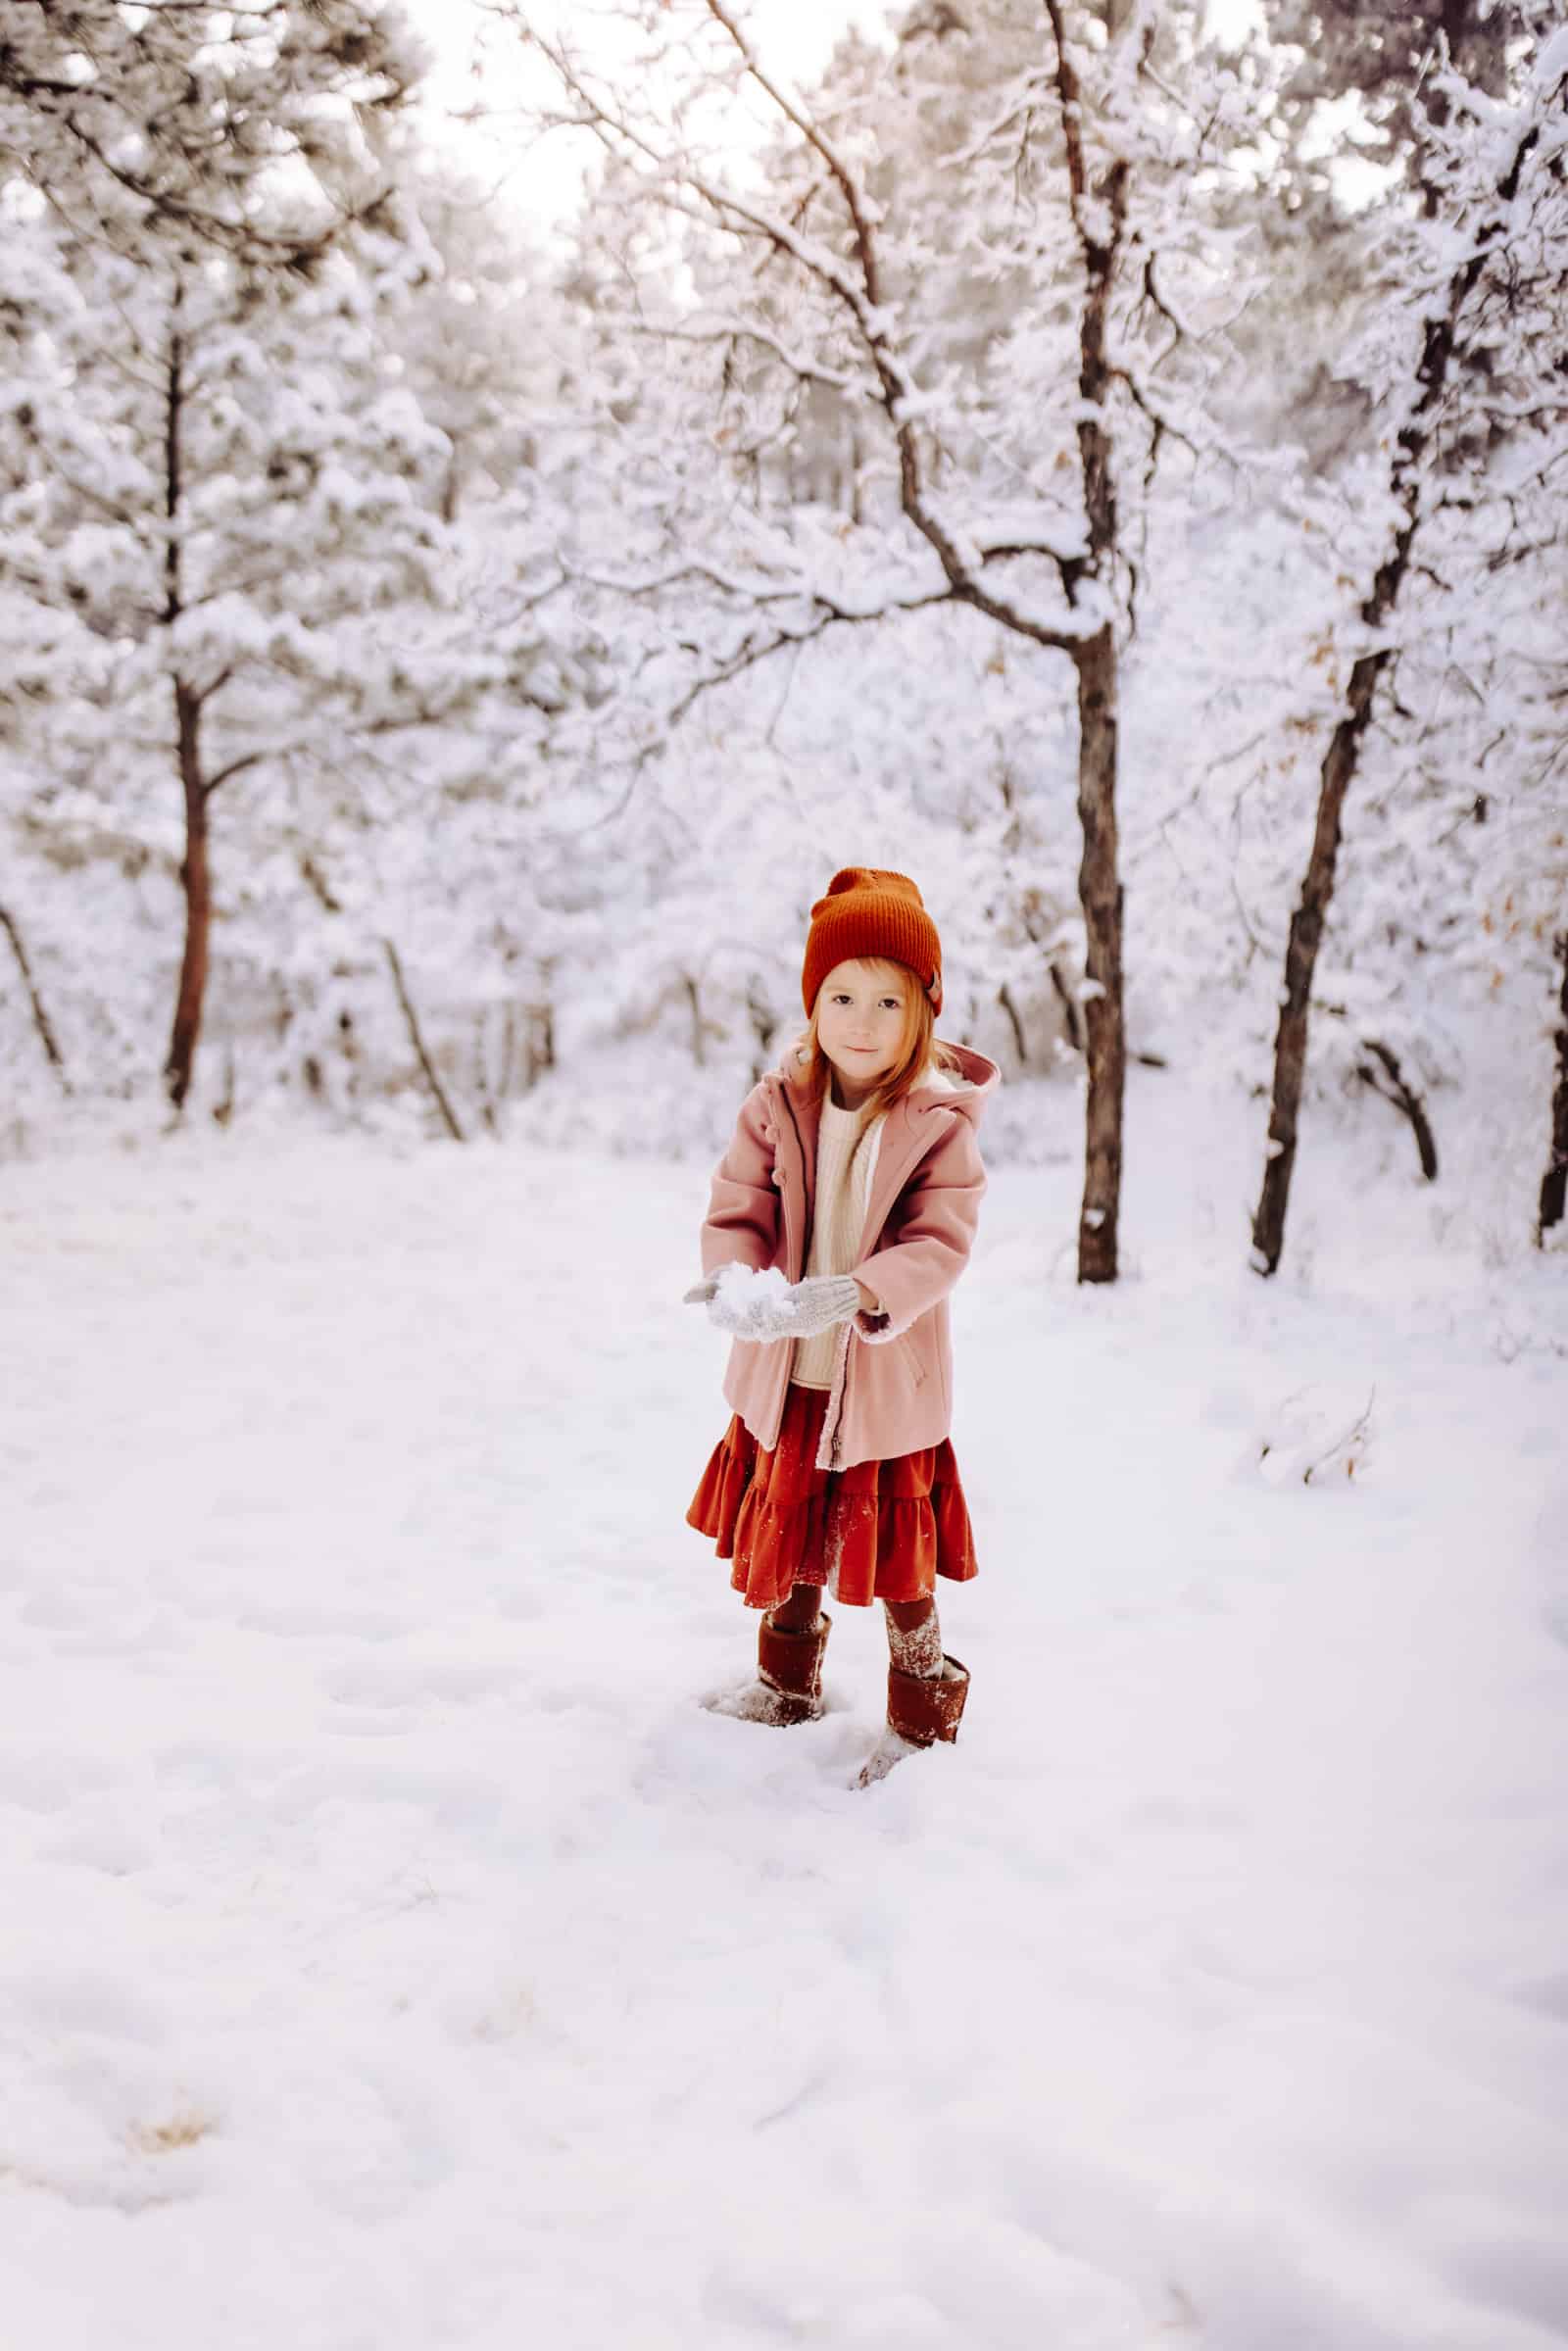 Colorado Springs winter photo session